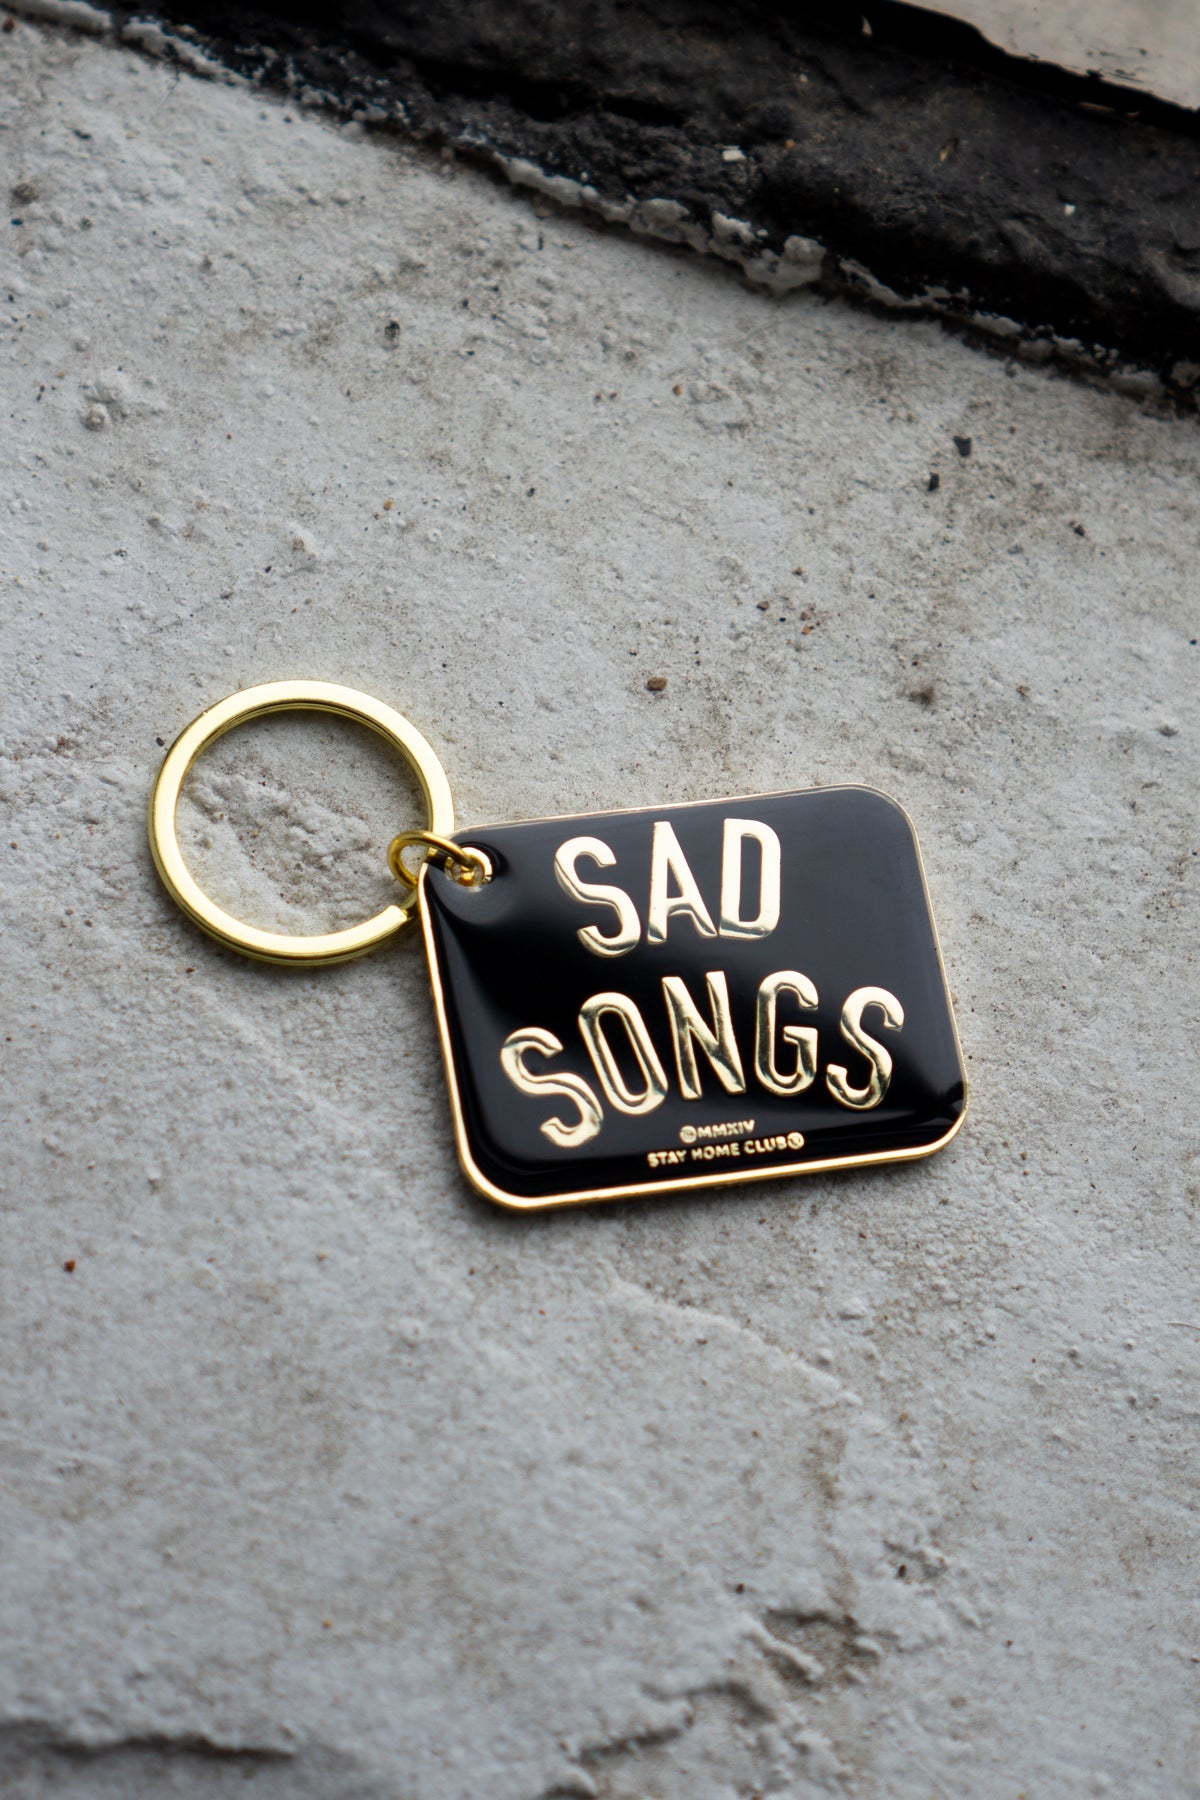 Sad Songs Keychain